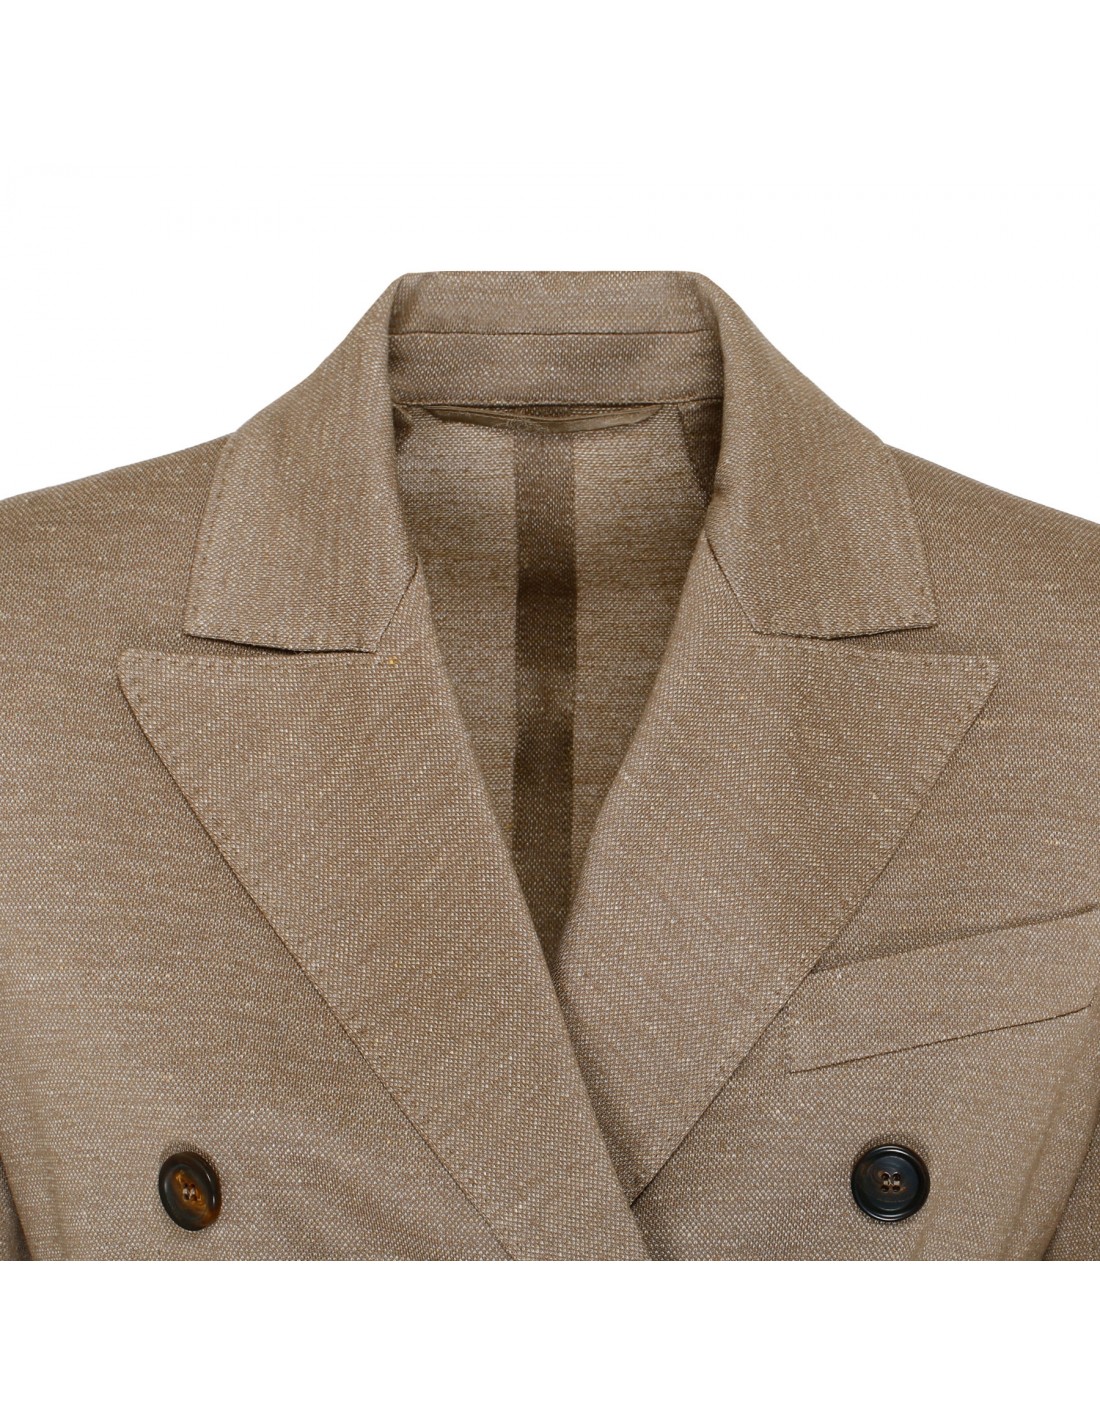 Sand linen and cotton jersey blazer